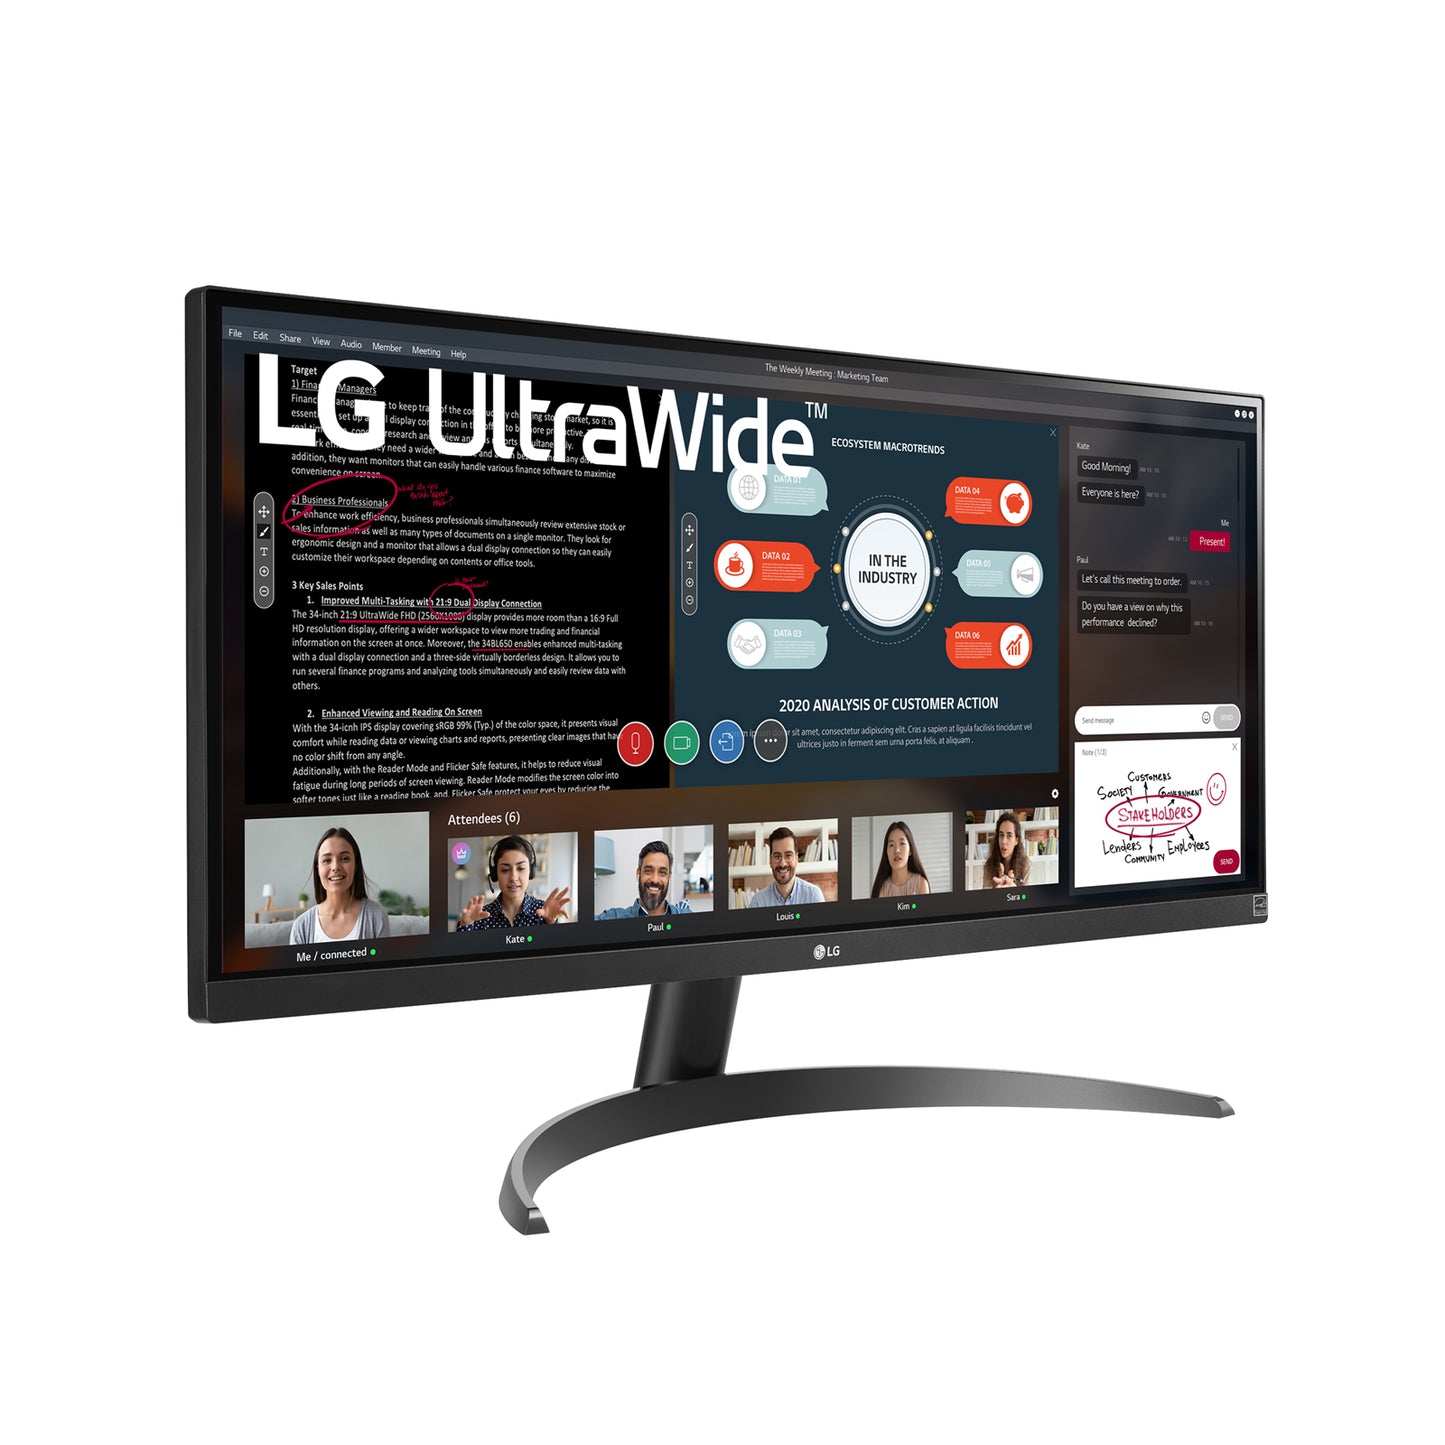 LG MONITOR LG FULL HD 29IN IPS MNTR DISPLAY ULTRAWIDE 2560 X 1080.HDMI